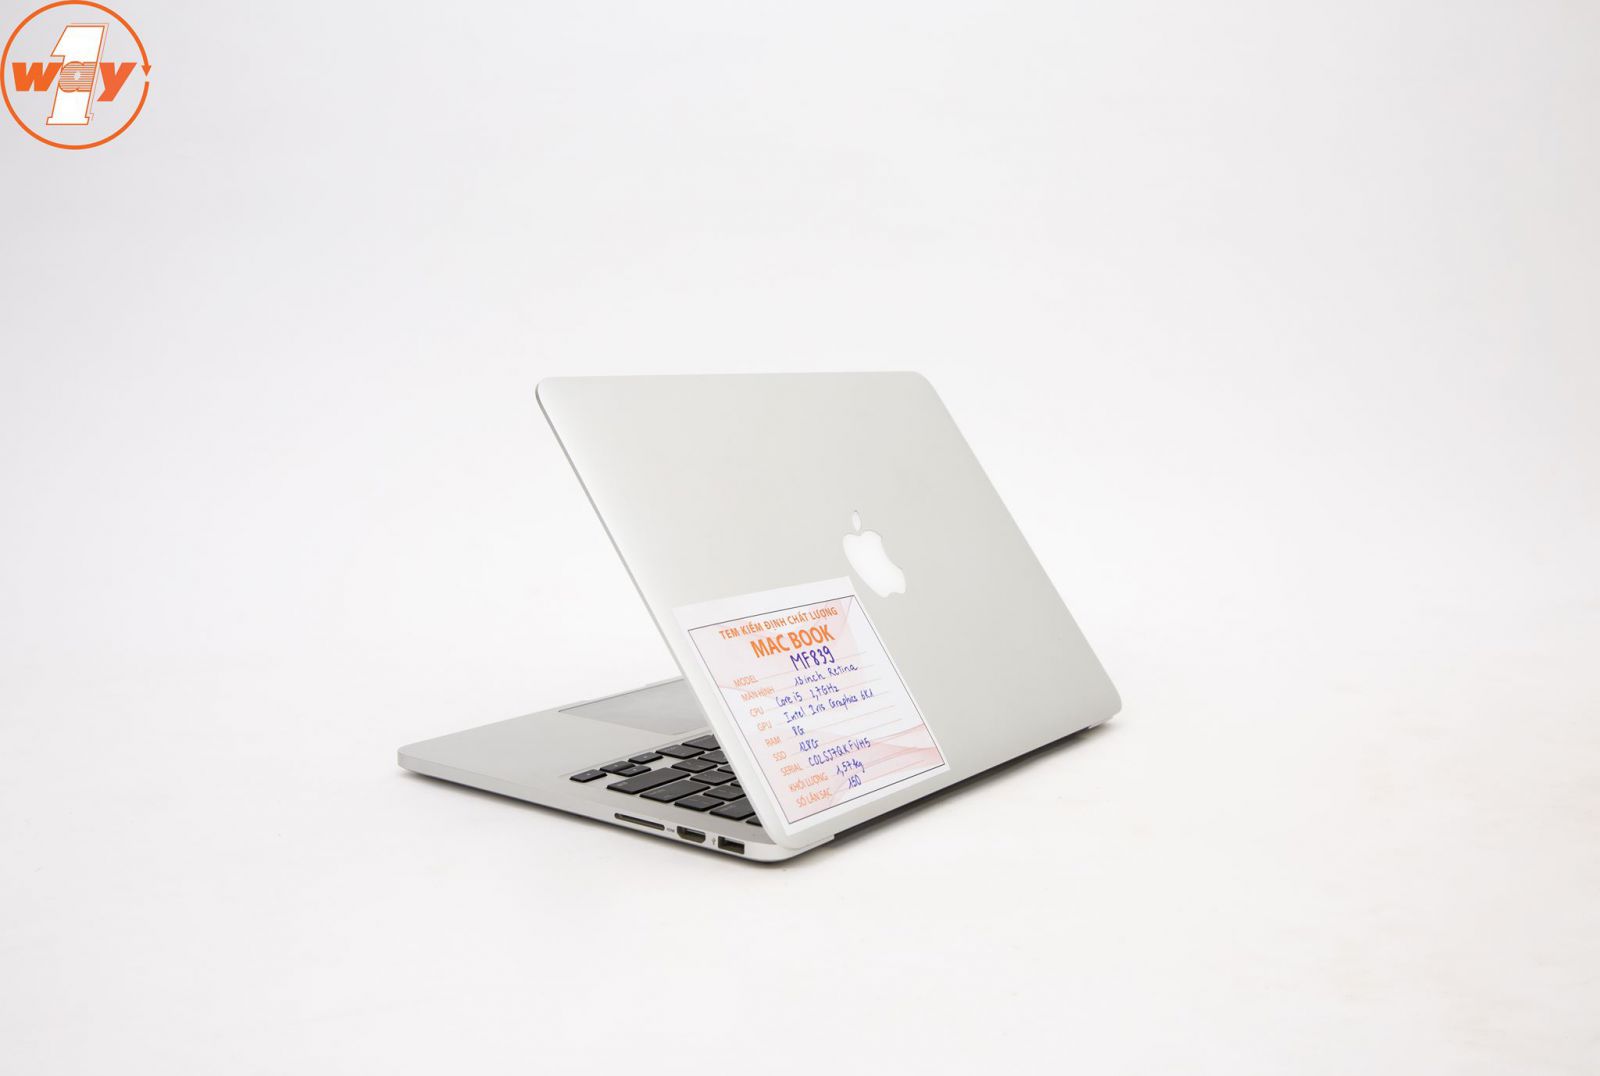 MacBook Pro Core i5 cũ 13 inch đời 2015 - MF839